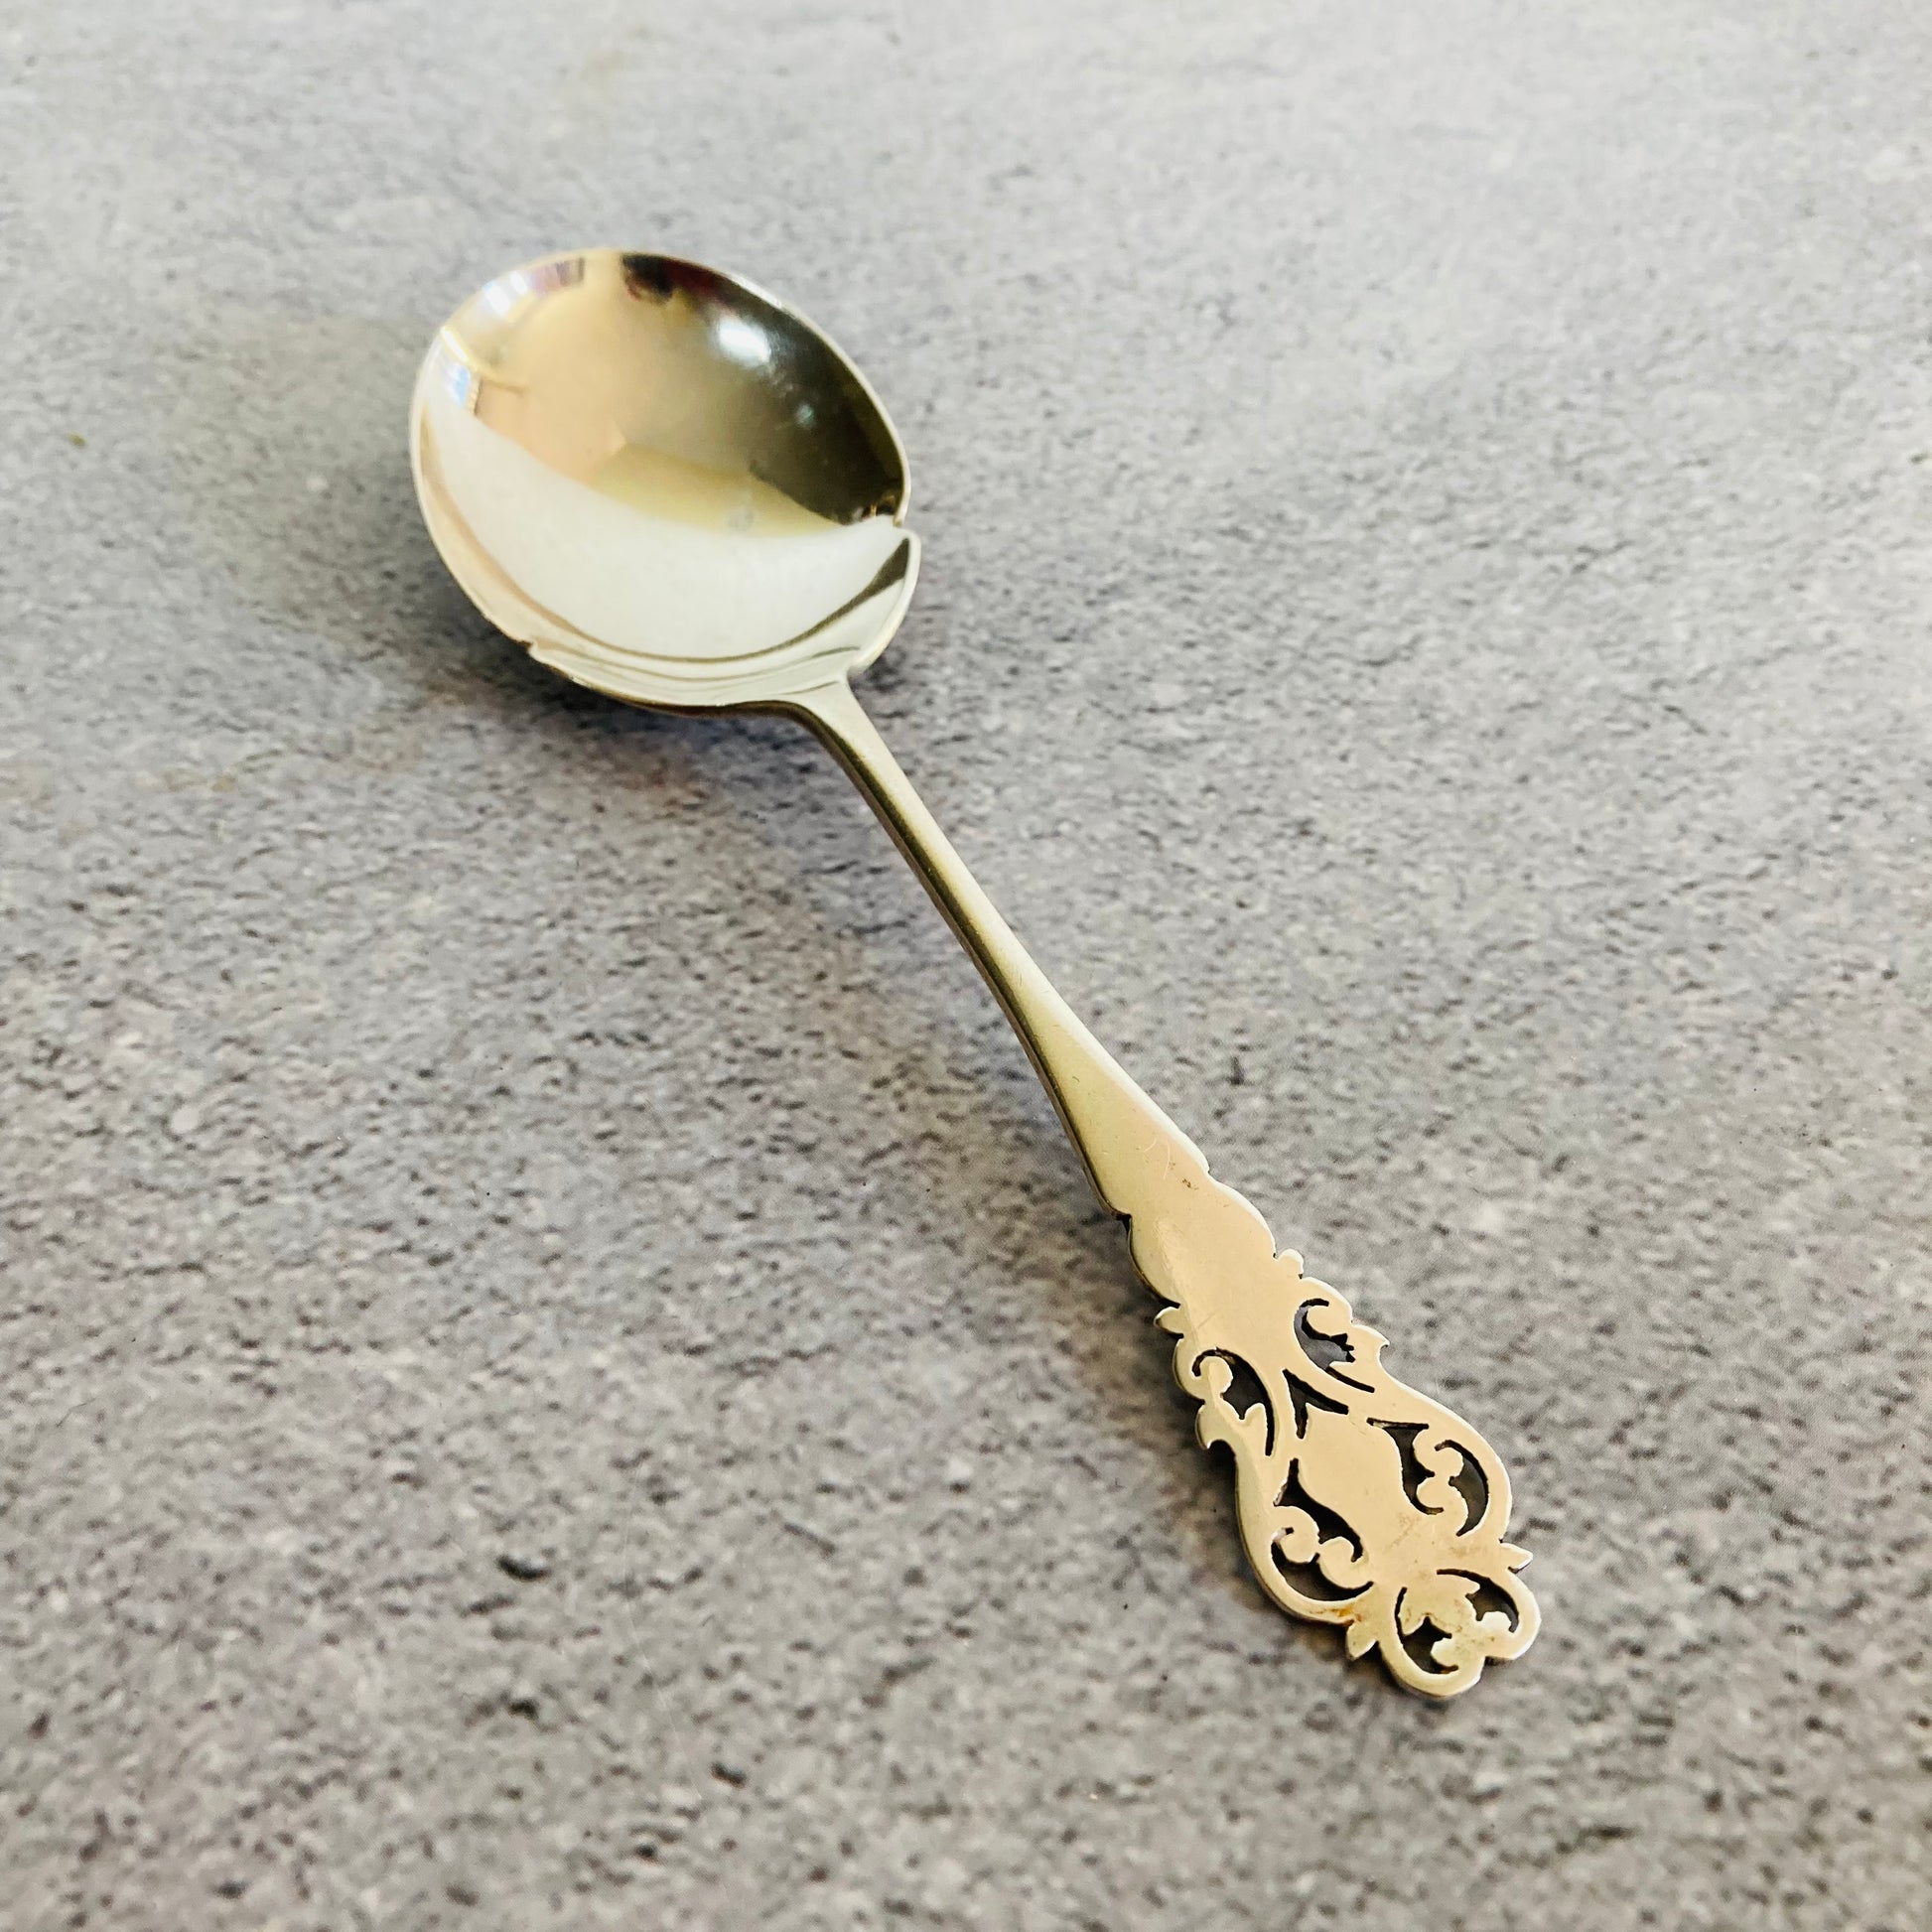 Antique Silver Renaissance Revival Preserves Spoon by Allen & Darwin